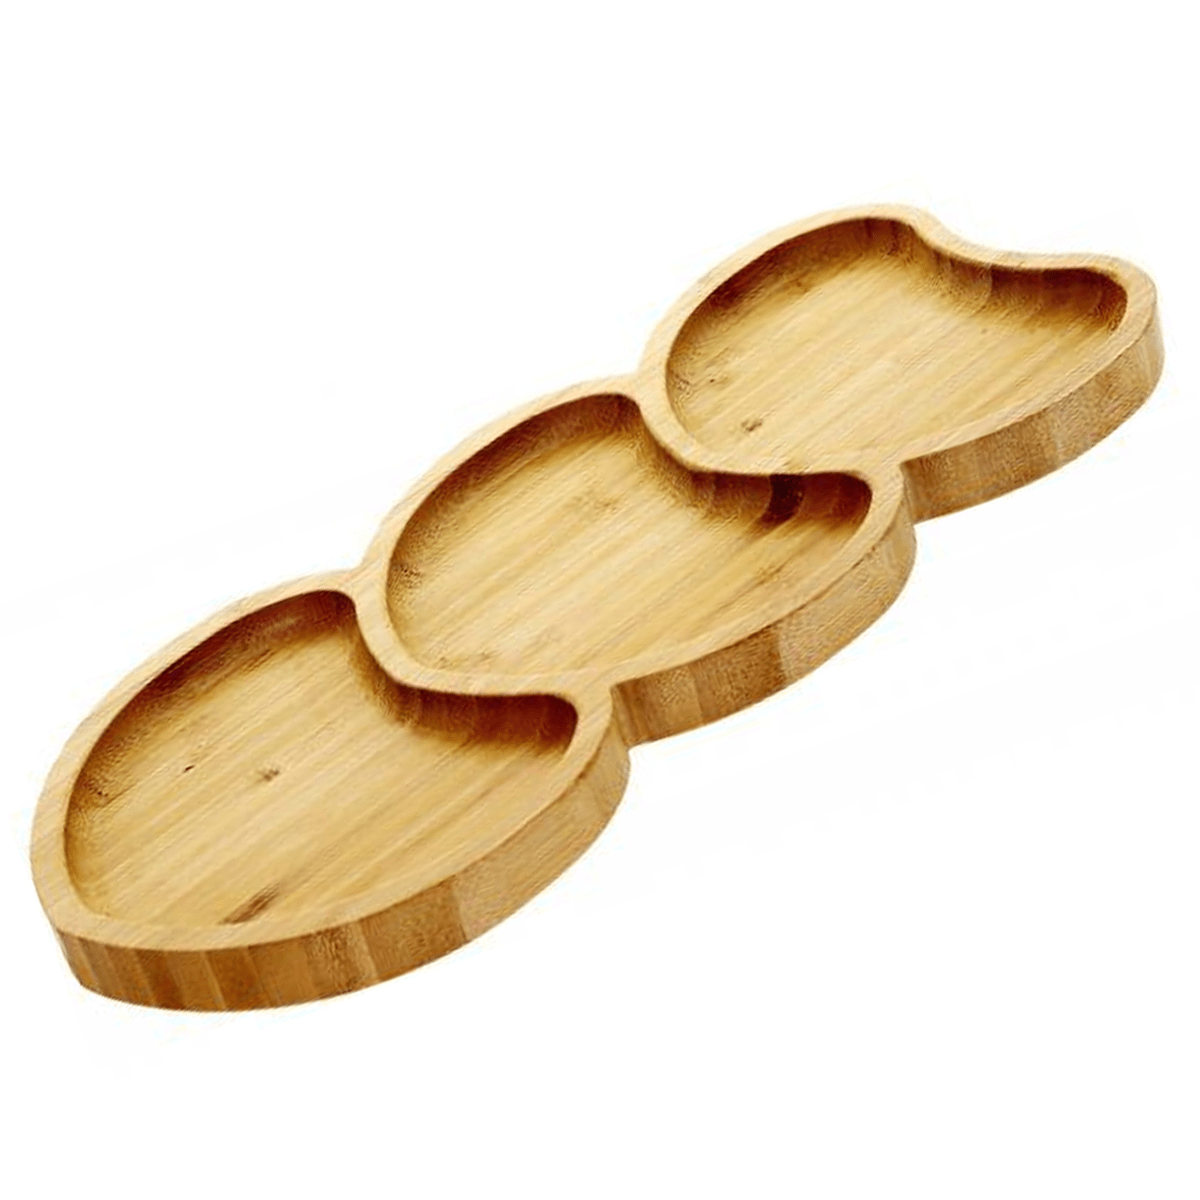 Liying Bamboo, Three Hearts Plates & Dishes